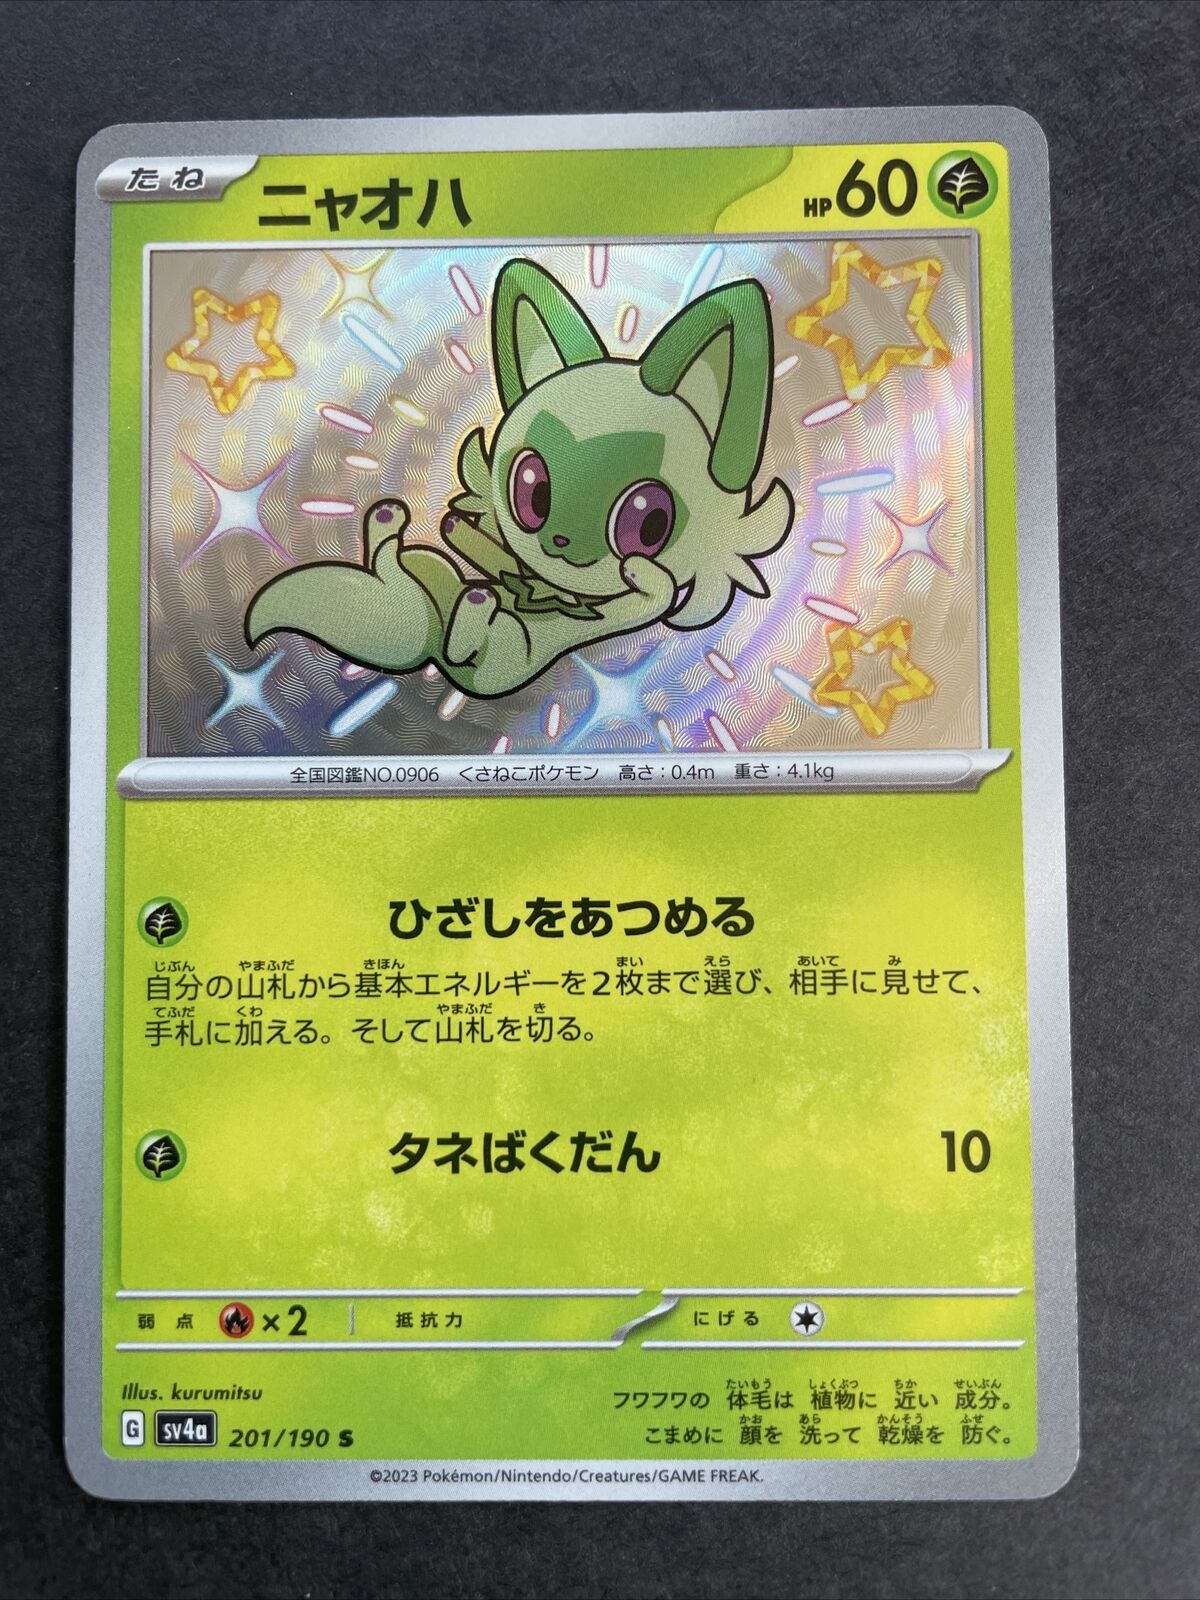 Sprigatito 201/190 S&V Shiny Treasure ex sv4a S Pokemon Card Japanese